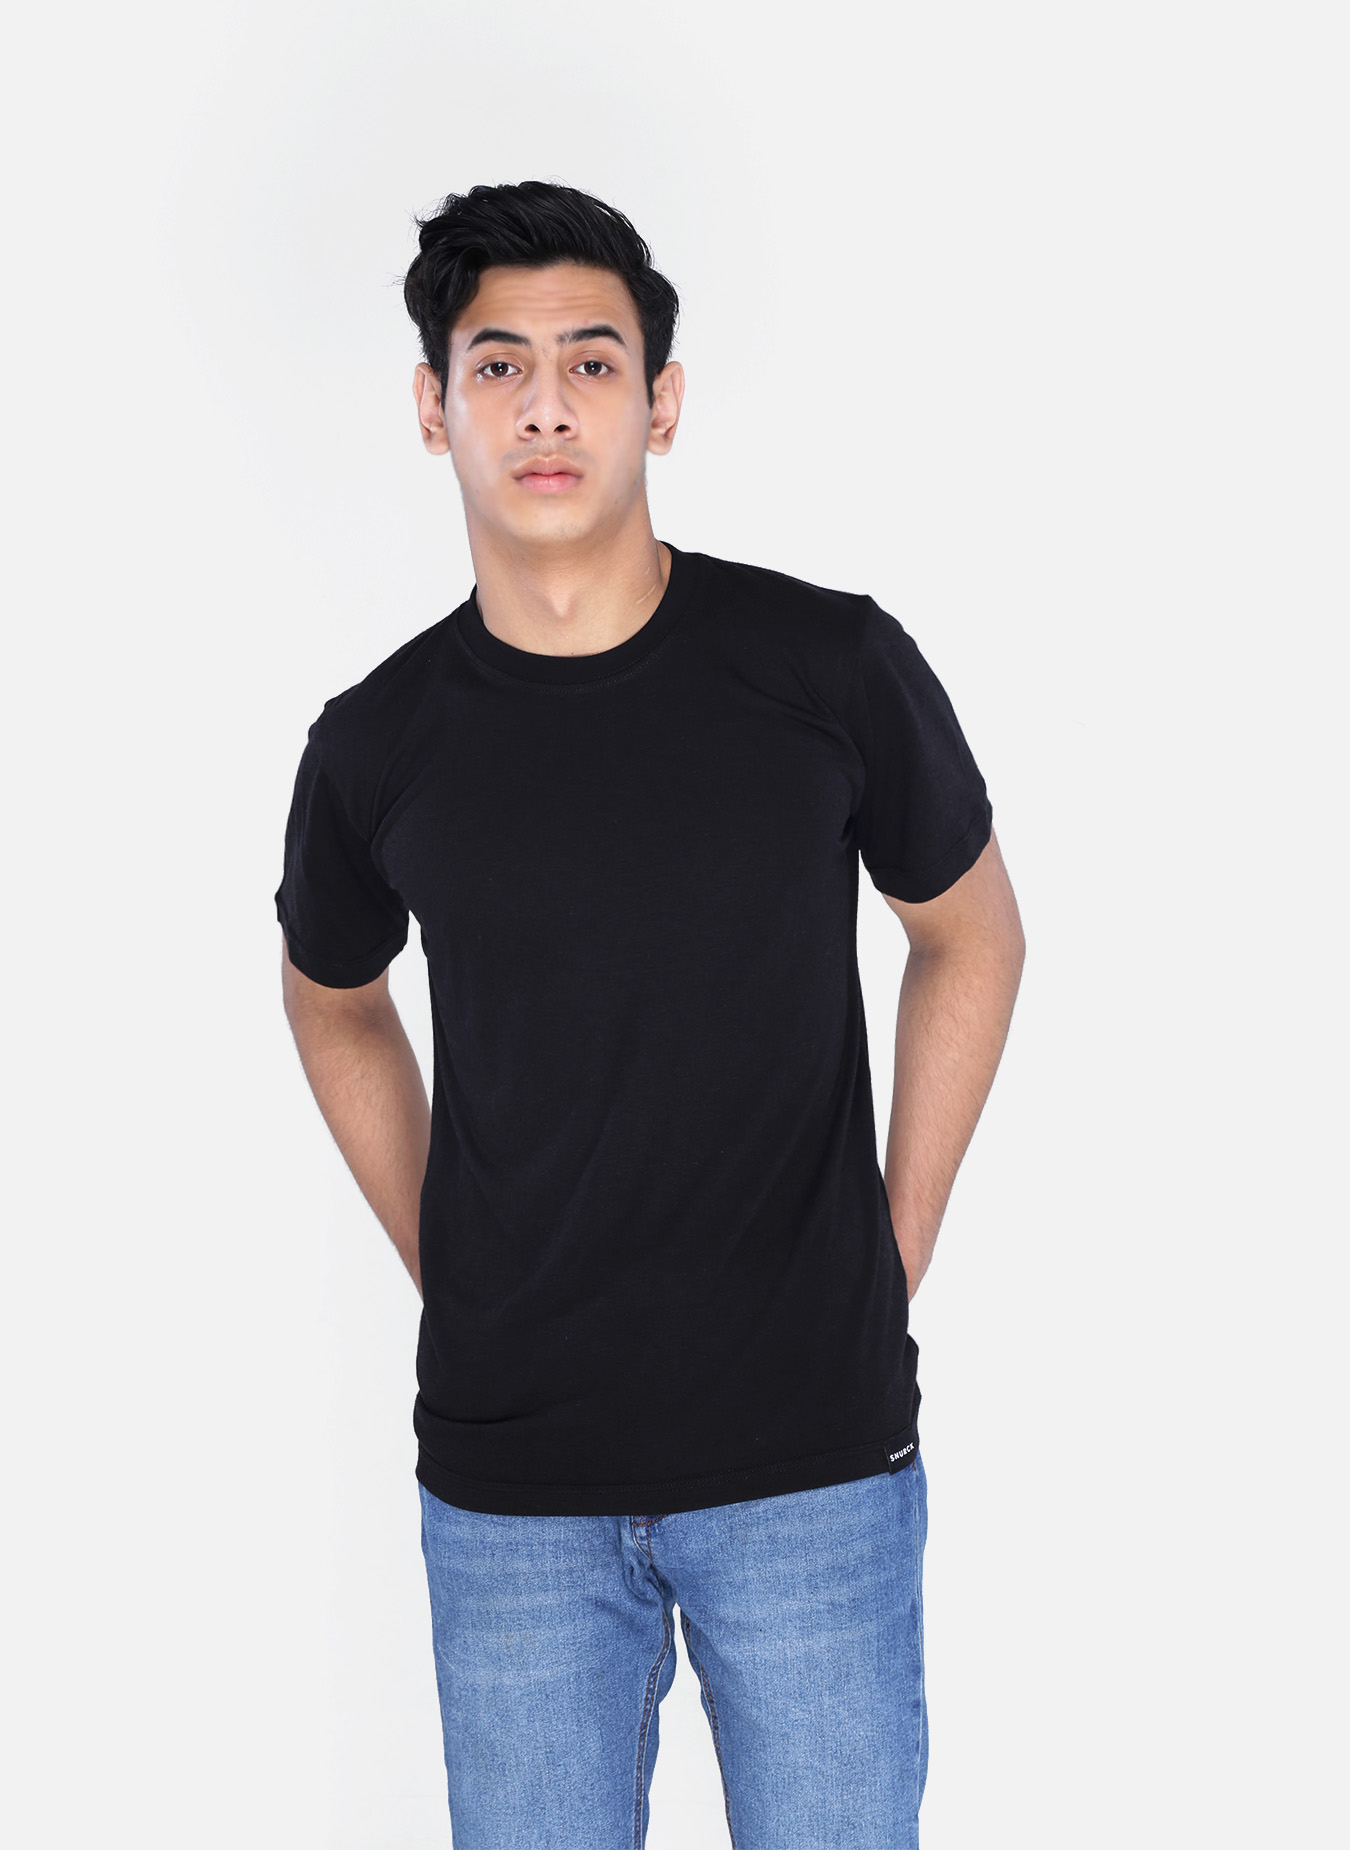 UltraComfort Bamboo T-Shirt - Jade Black | Snurck Outfit